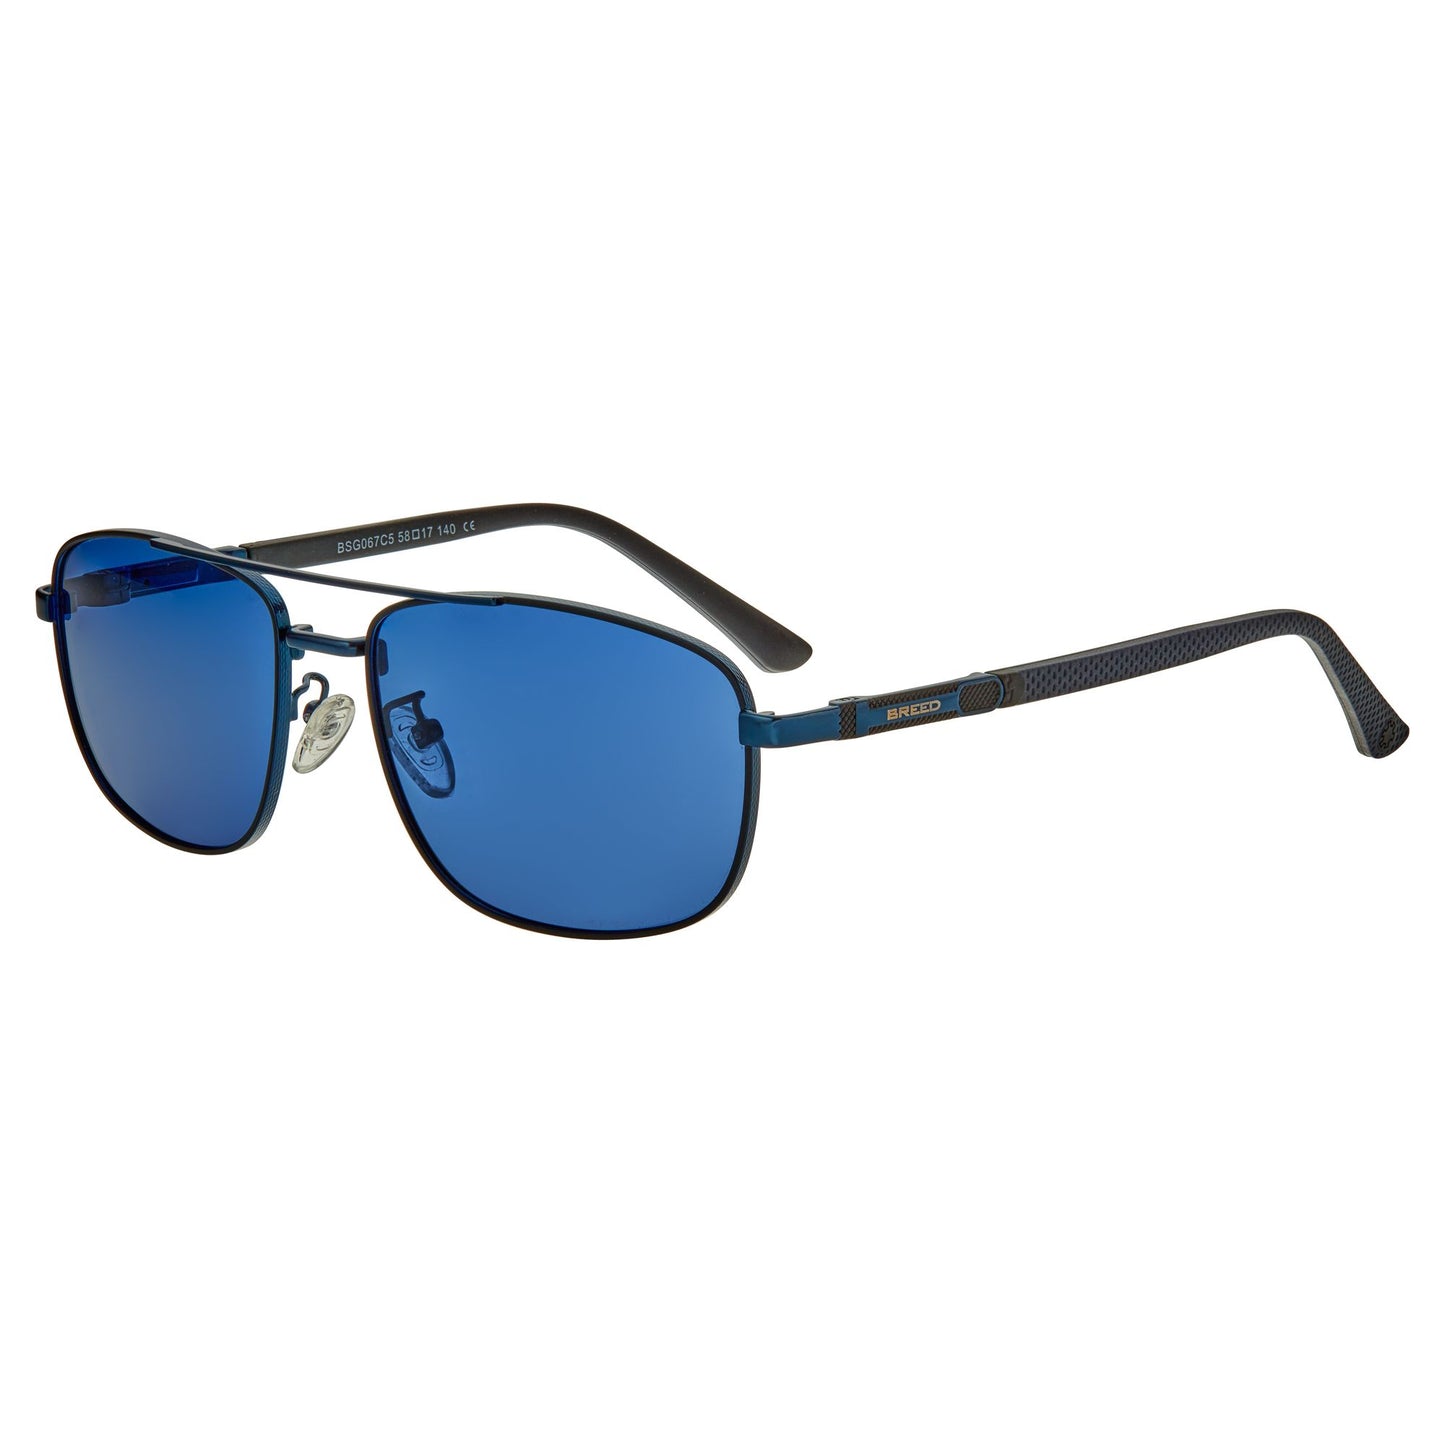 Breed Gotham Polarized Sunglasses - Navy/Blue - BSG067C5